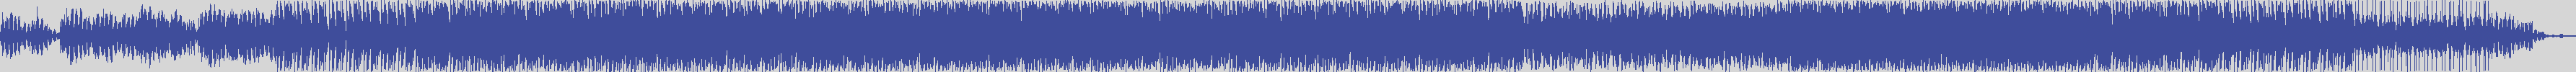 vitti_records [VIT020] Slow Cam - Fatality Rate [Original Mix] audio wave form